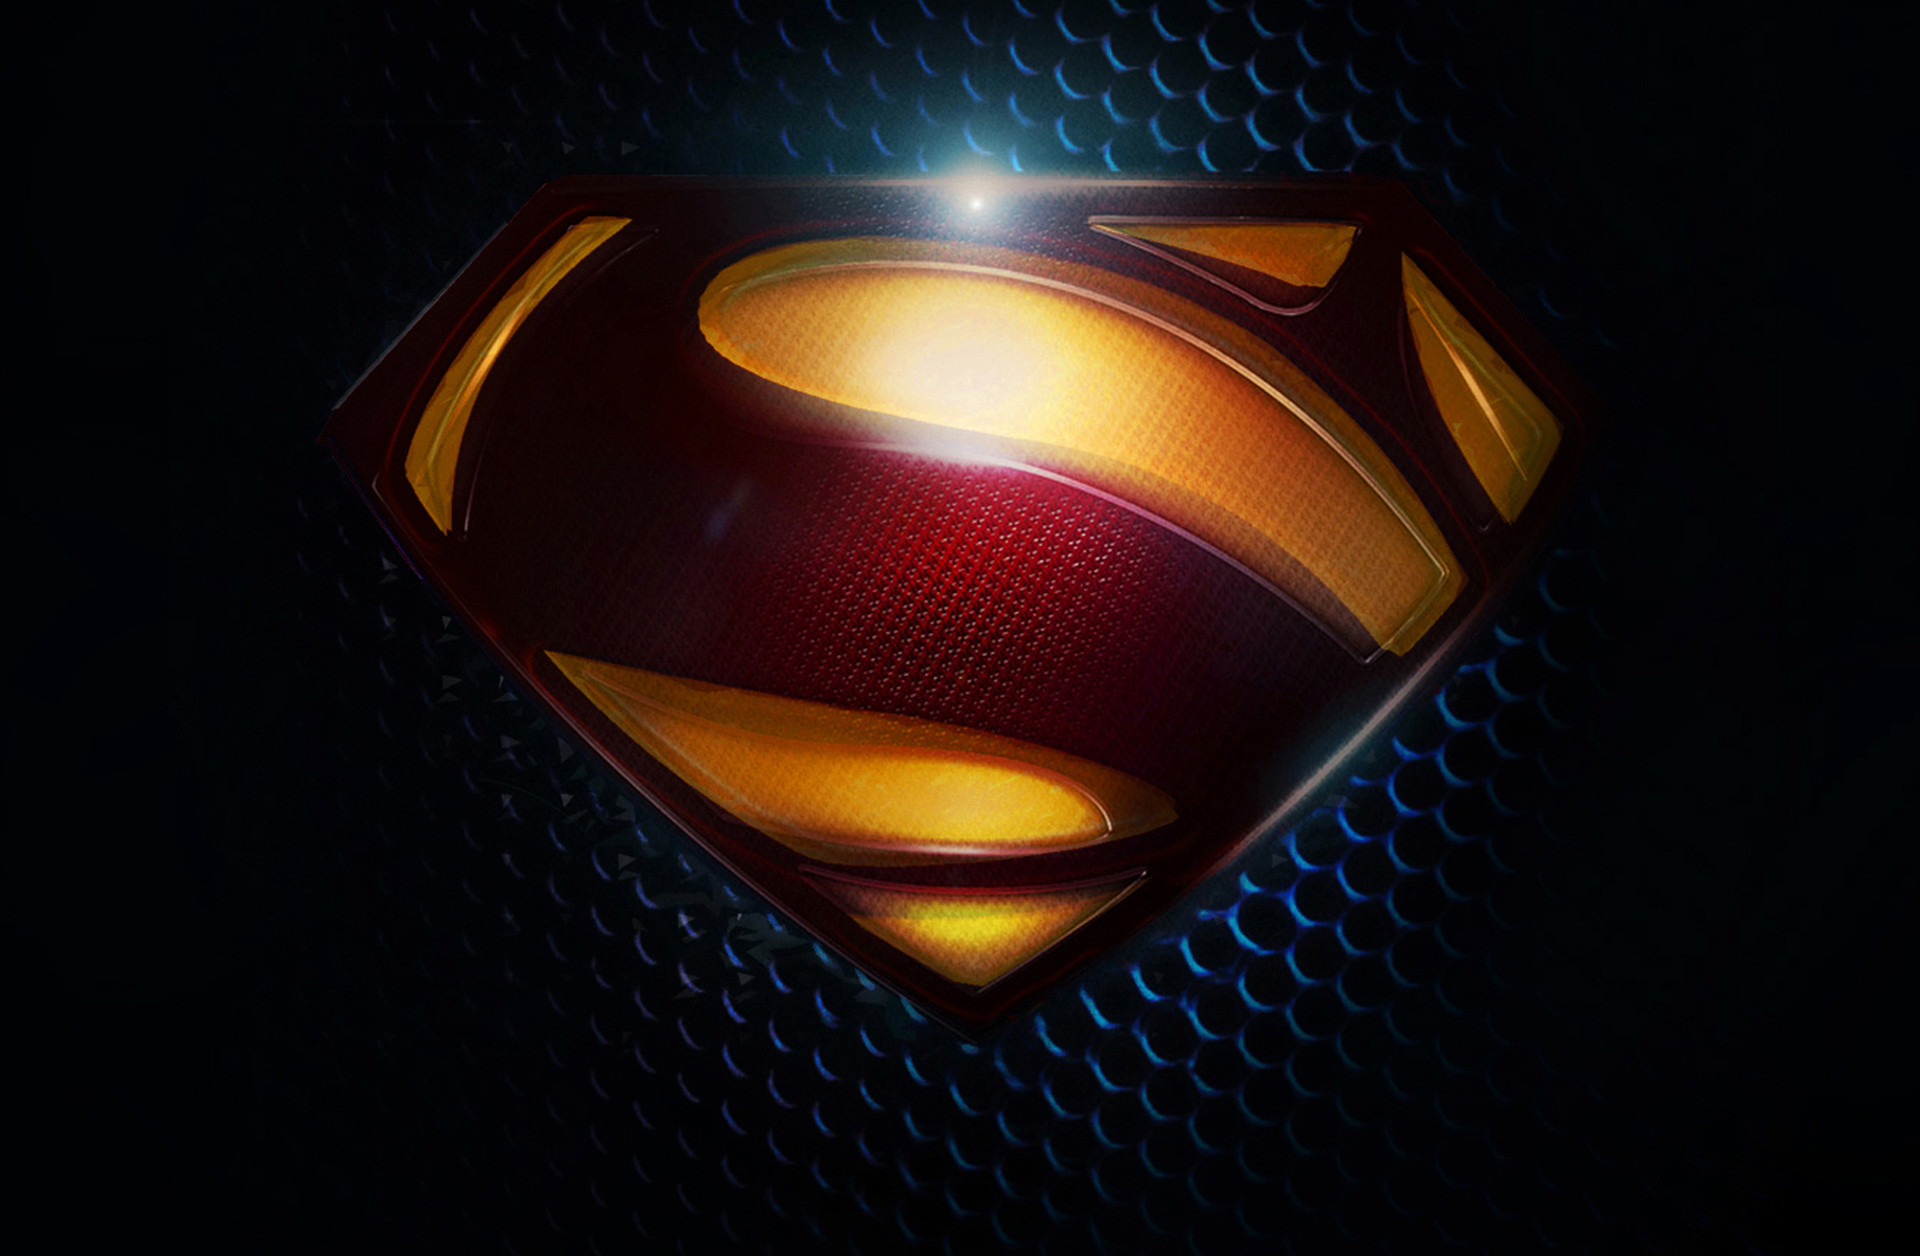 1920x1256 Superman the man of steel 2013 logo hd wallpaper - Superman The Man Of  Steel 2013